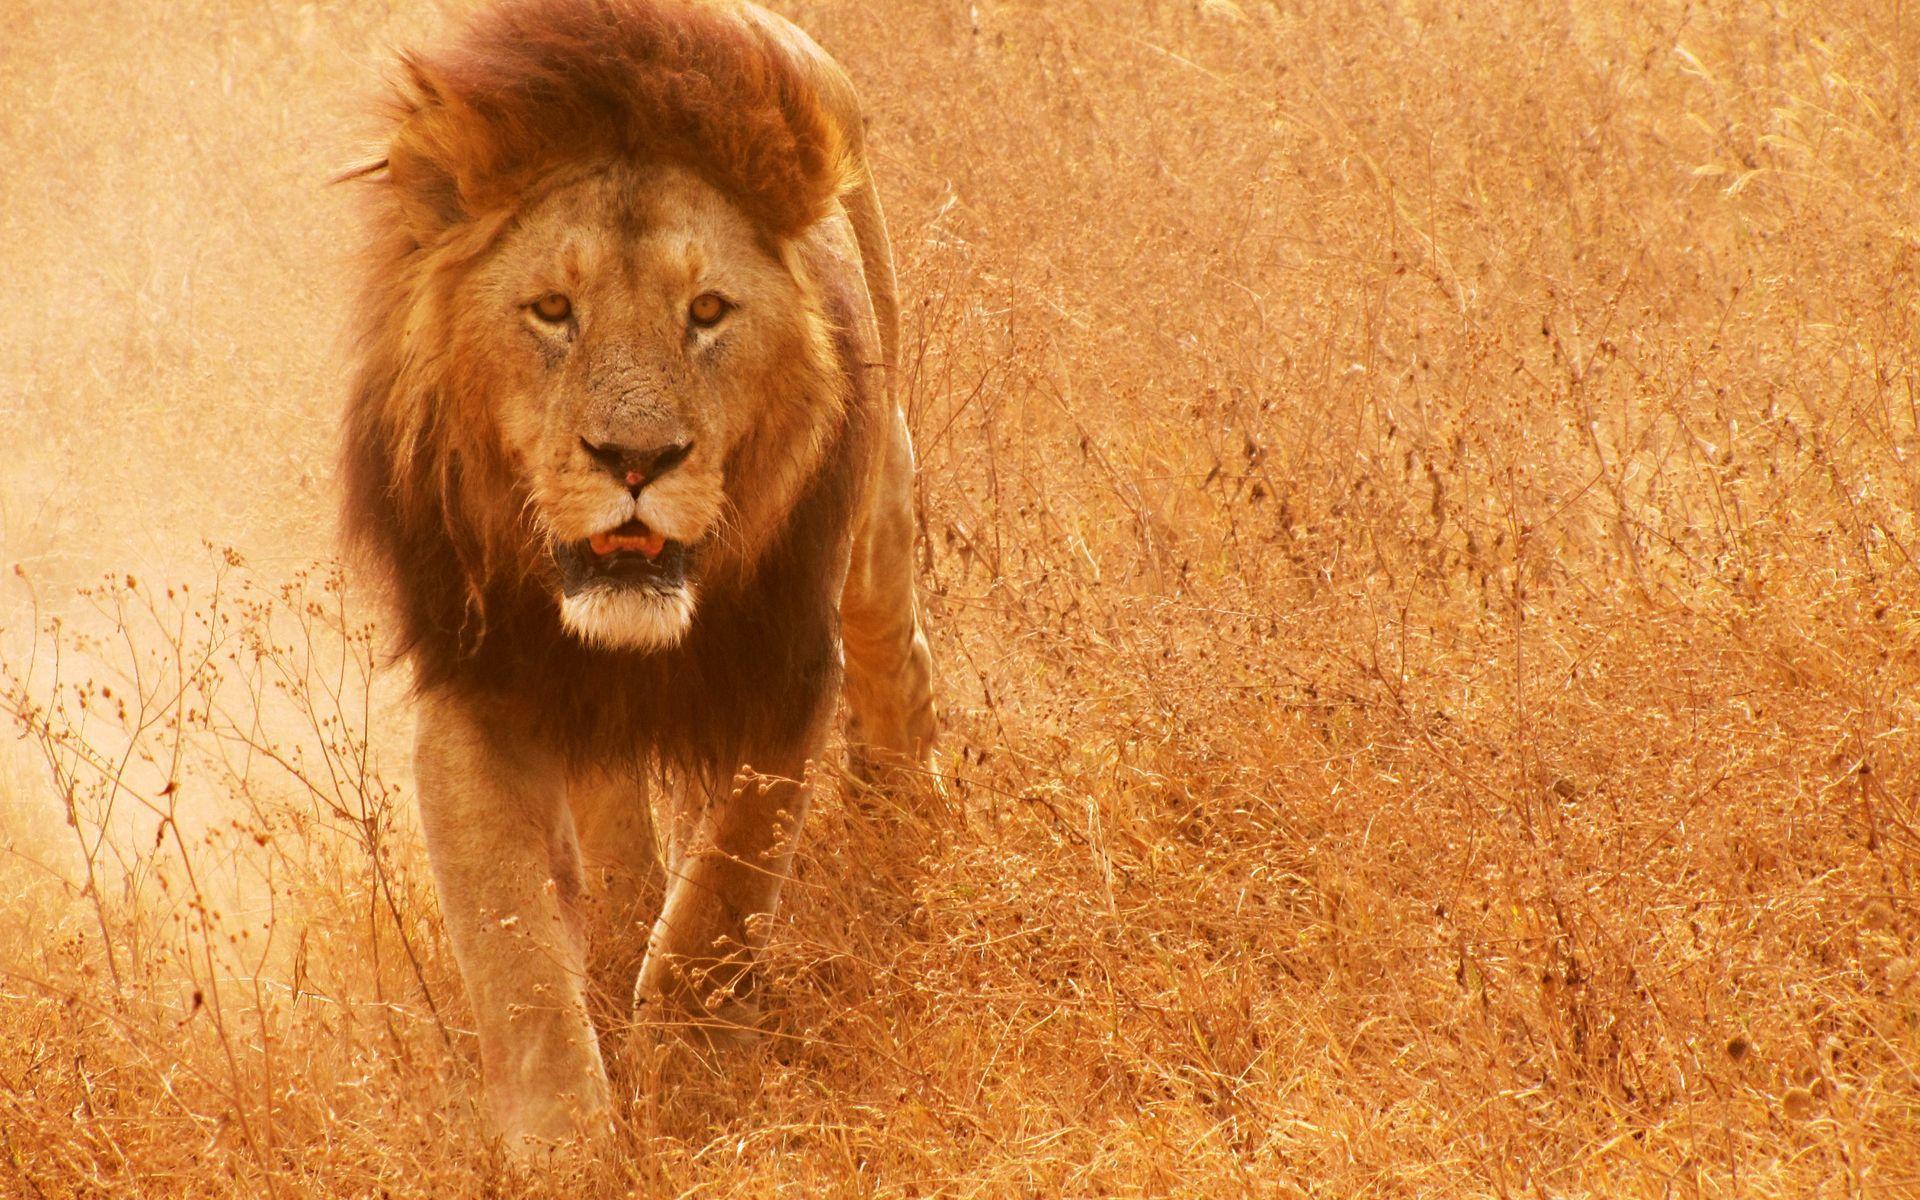 Cool Lion Wallpaper